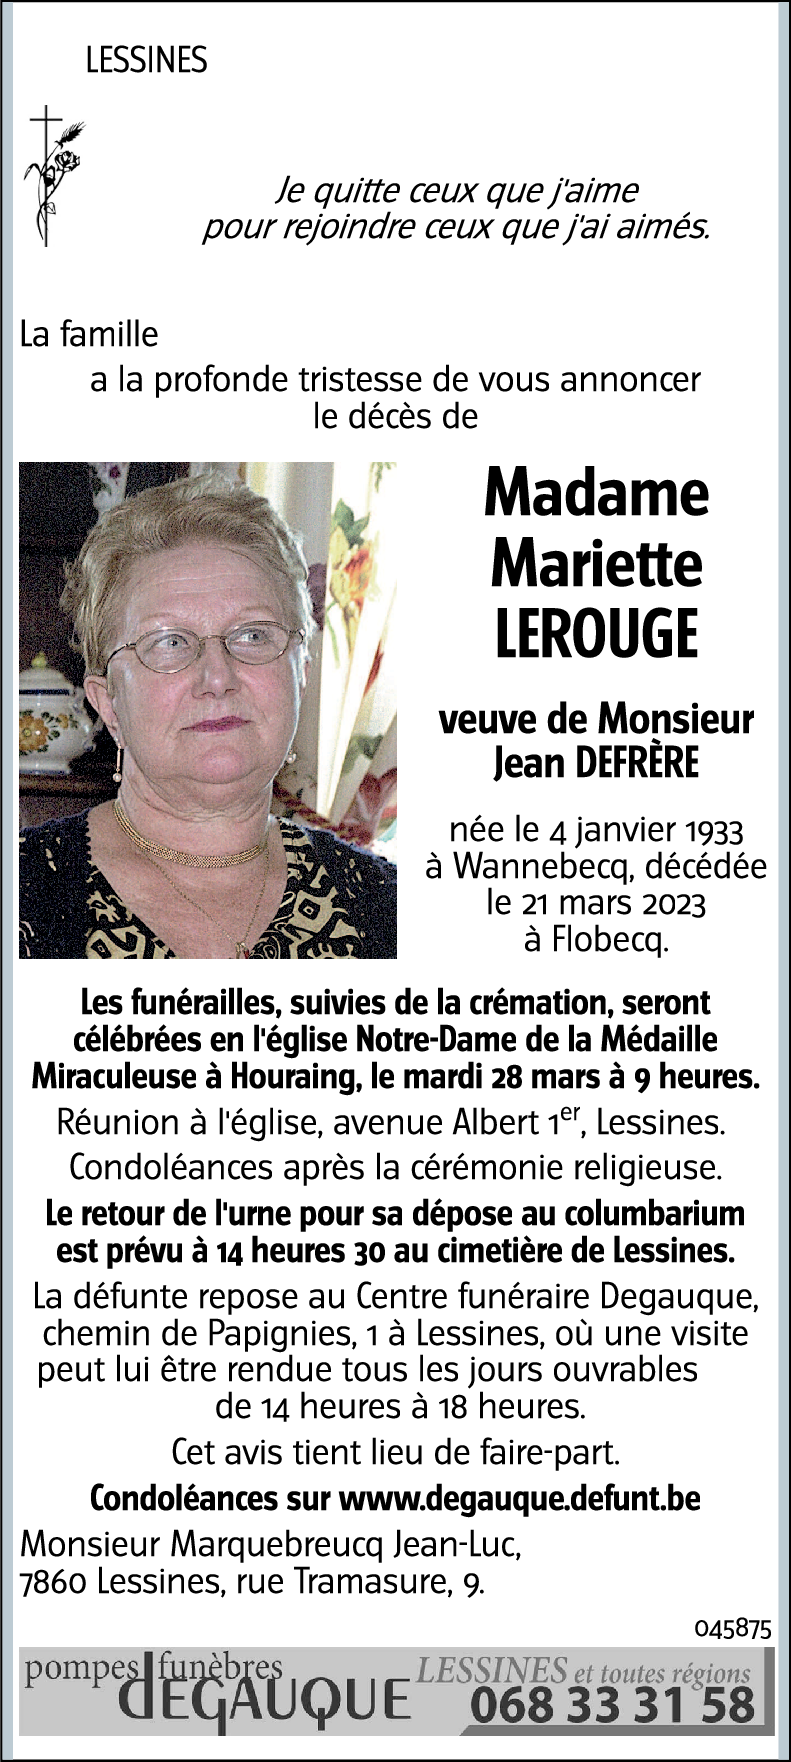 Mariette LEROUGE